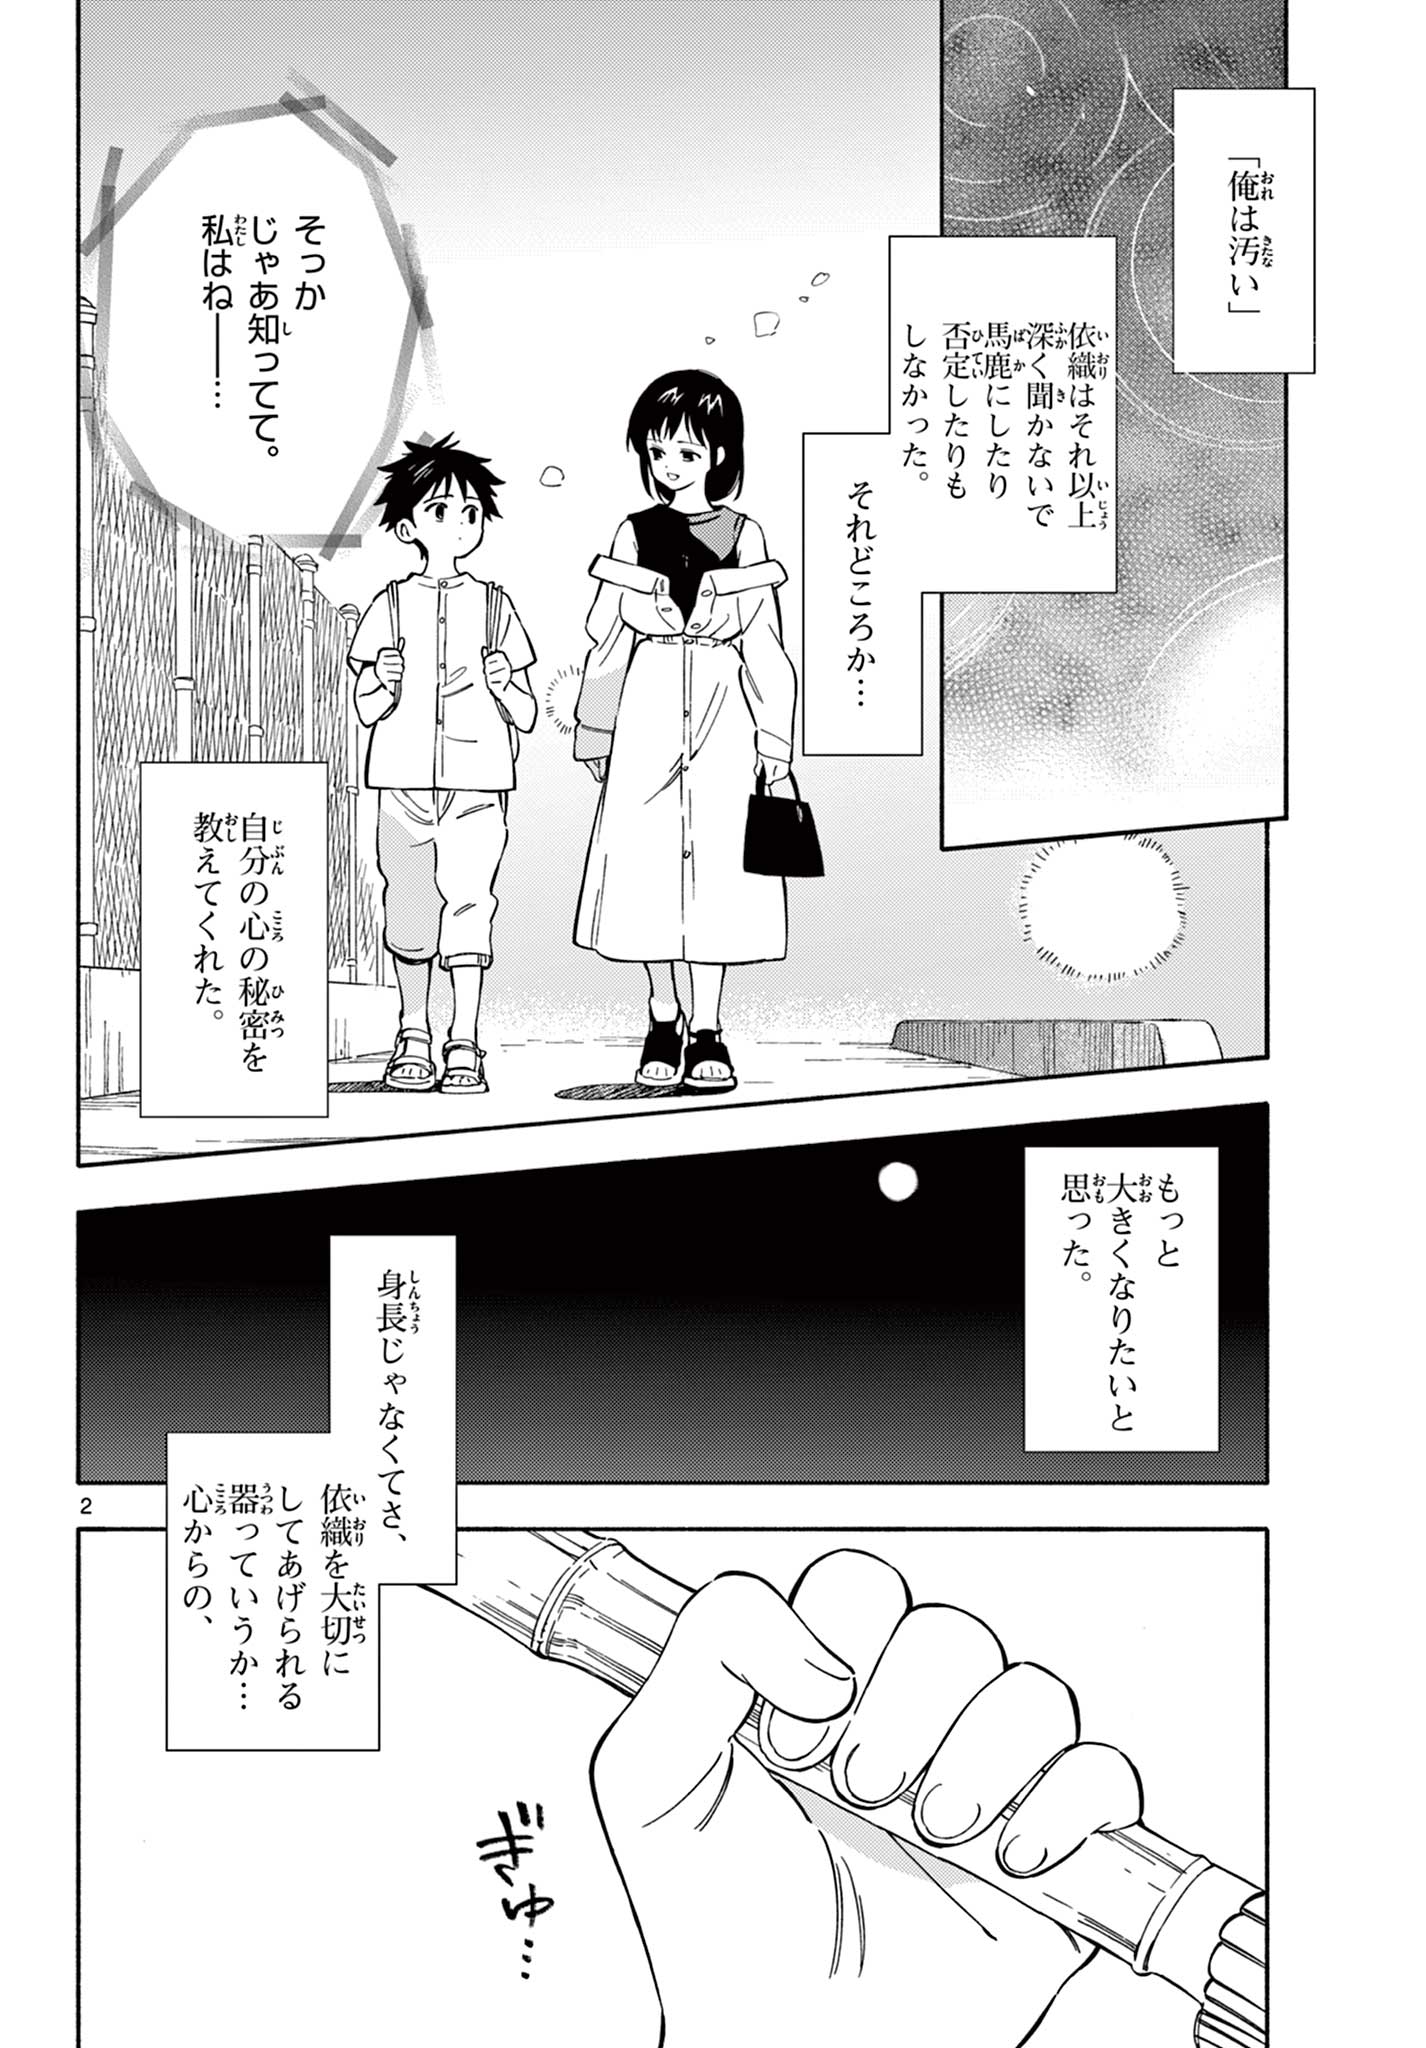 Nami no Shijima no Horizont - Chapter 8.1 - Page 2